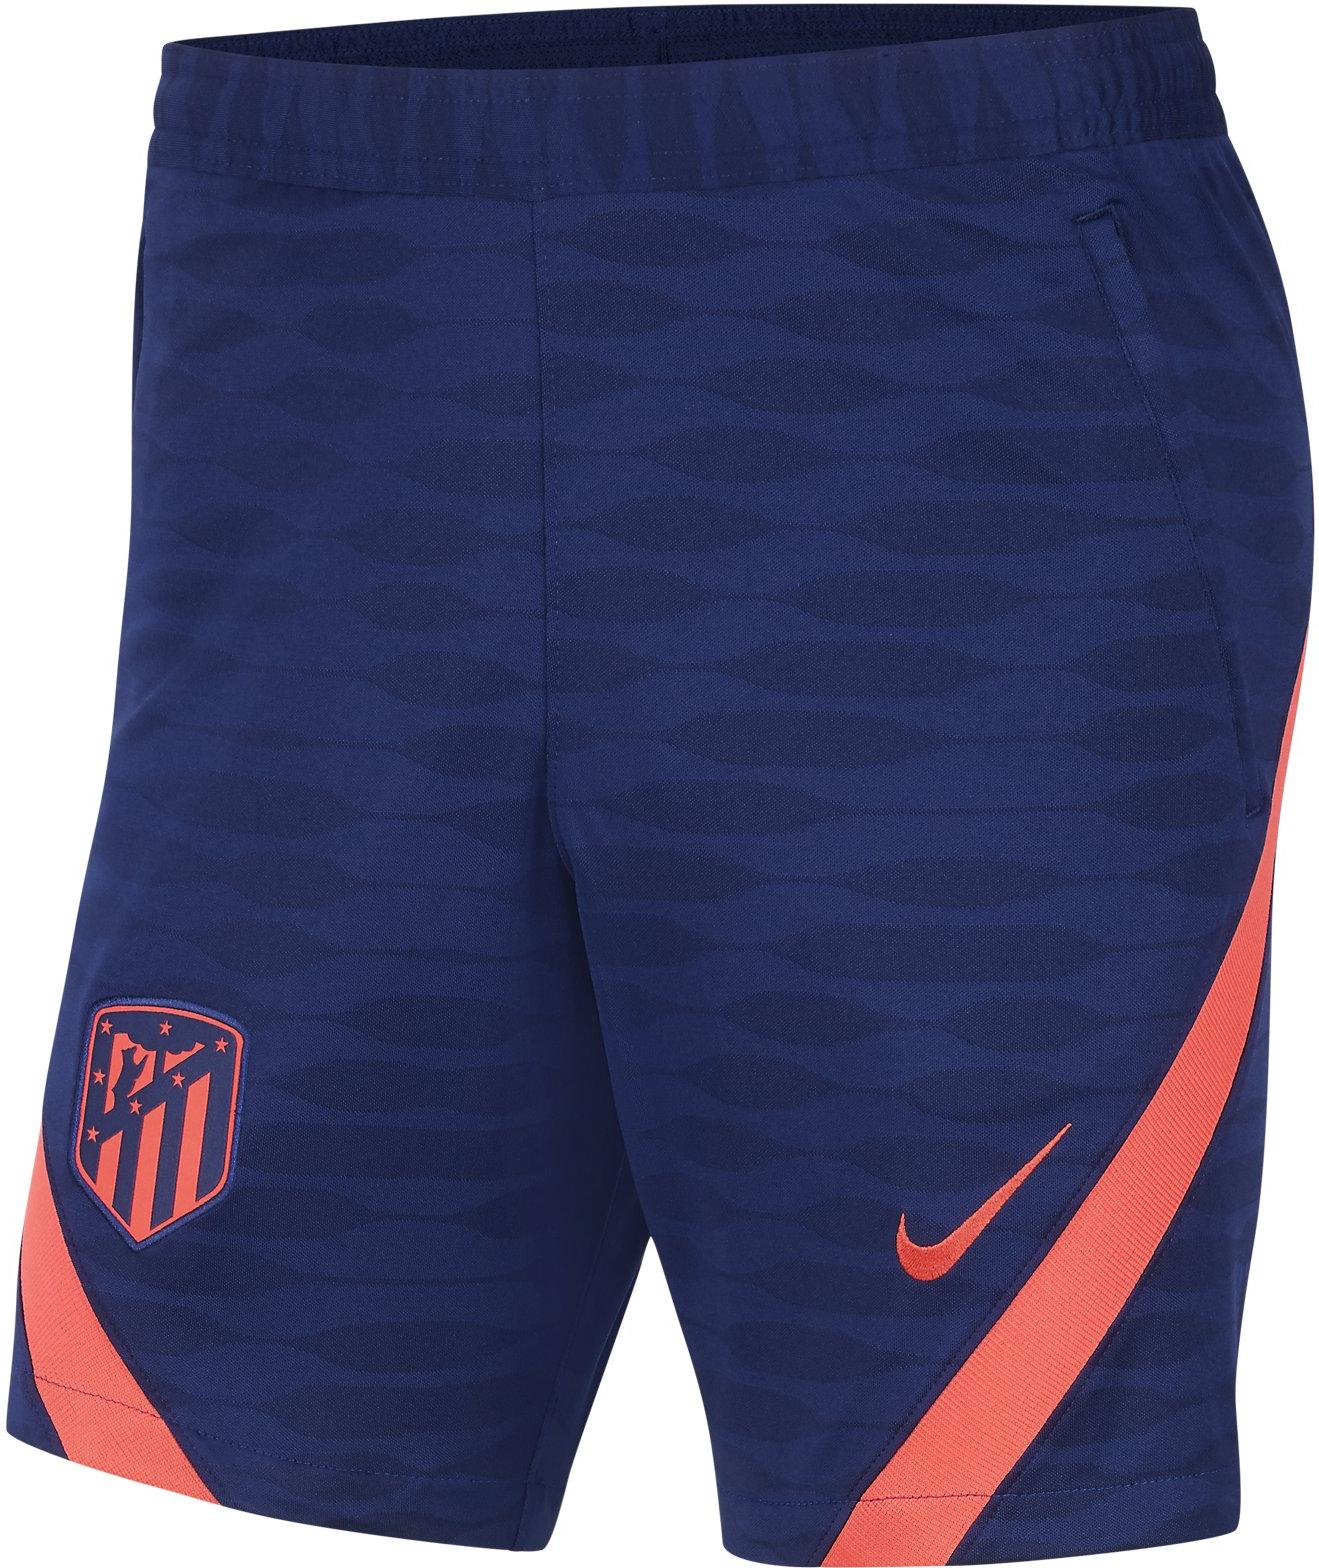 Pantalón corto Nike Atlético Madrid Strike Men s Dri-FIT Soccer Shorts